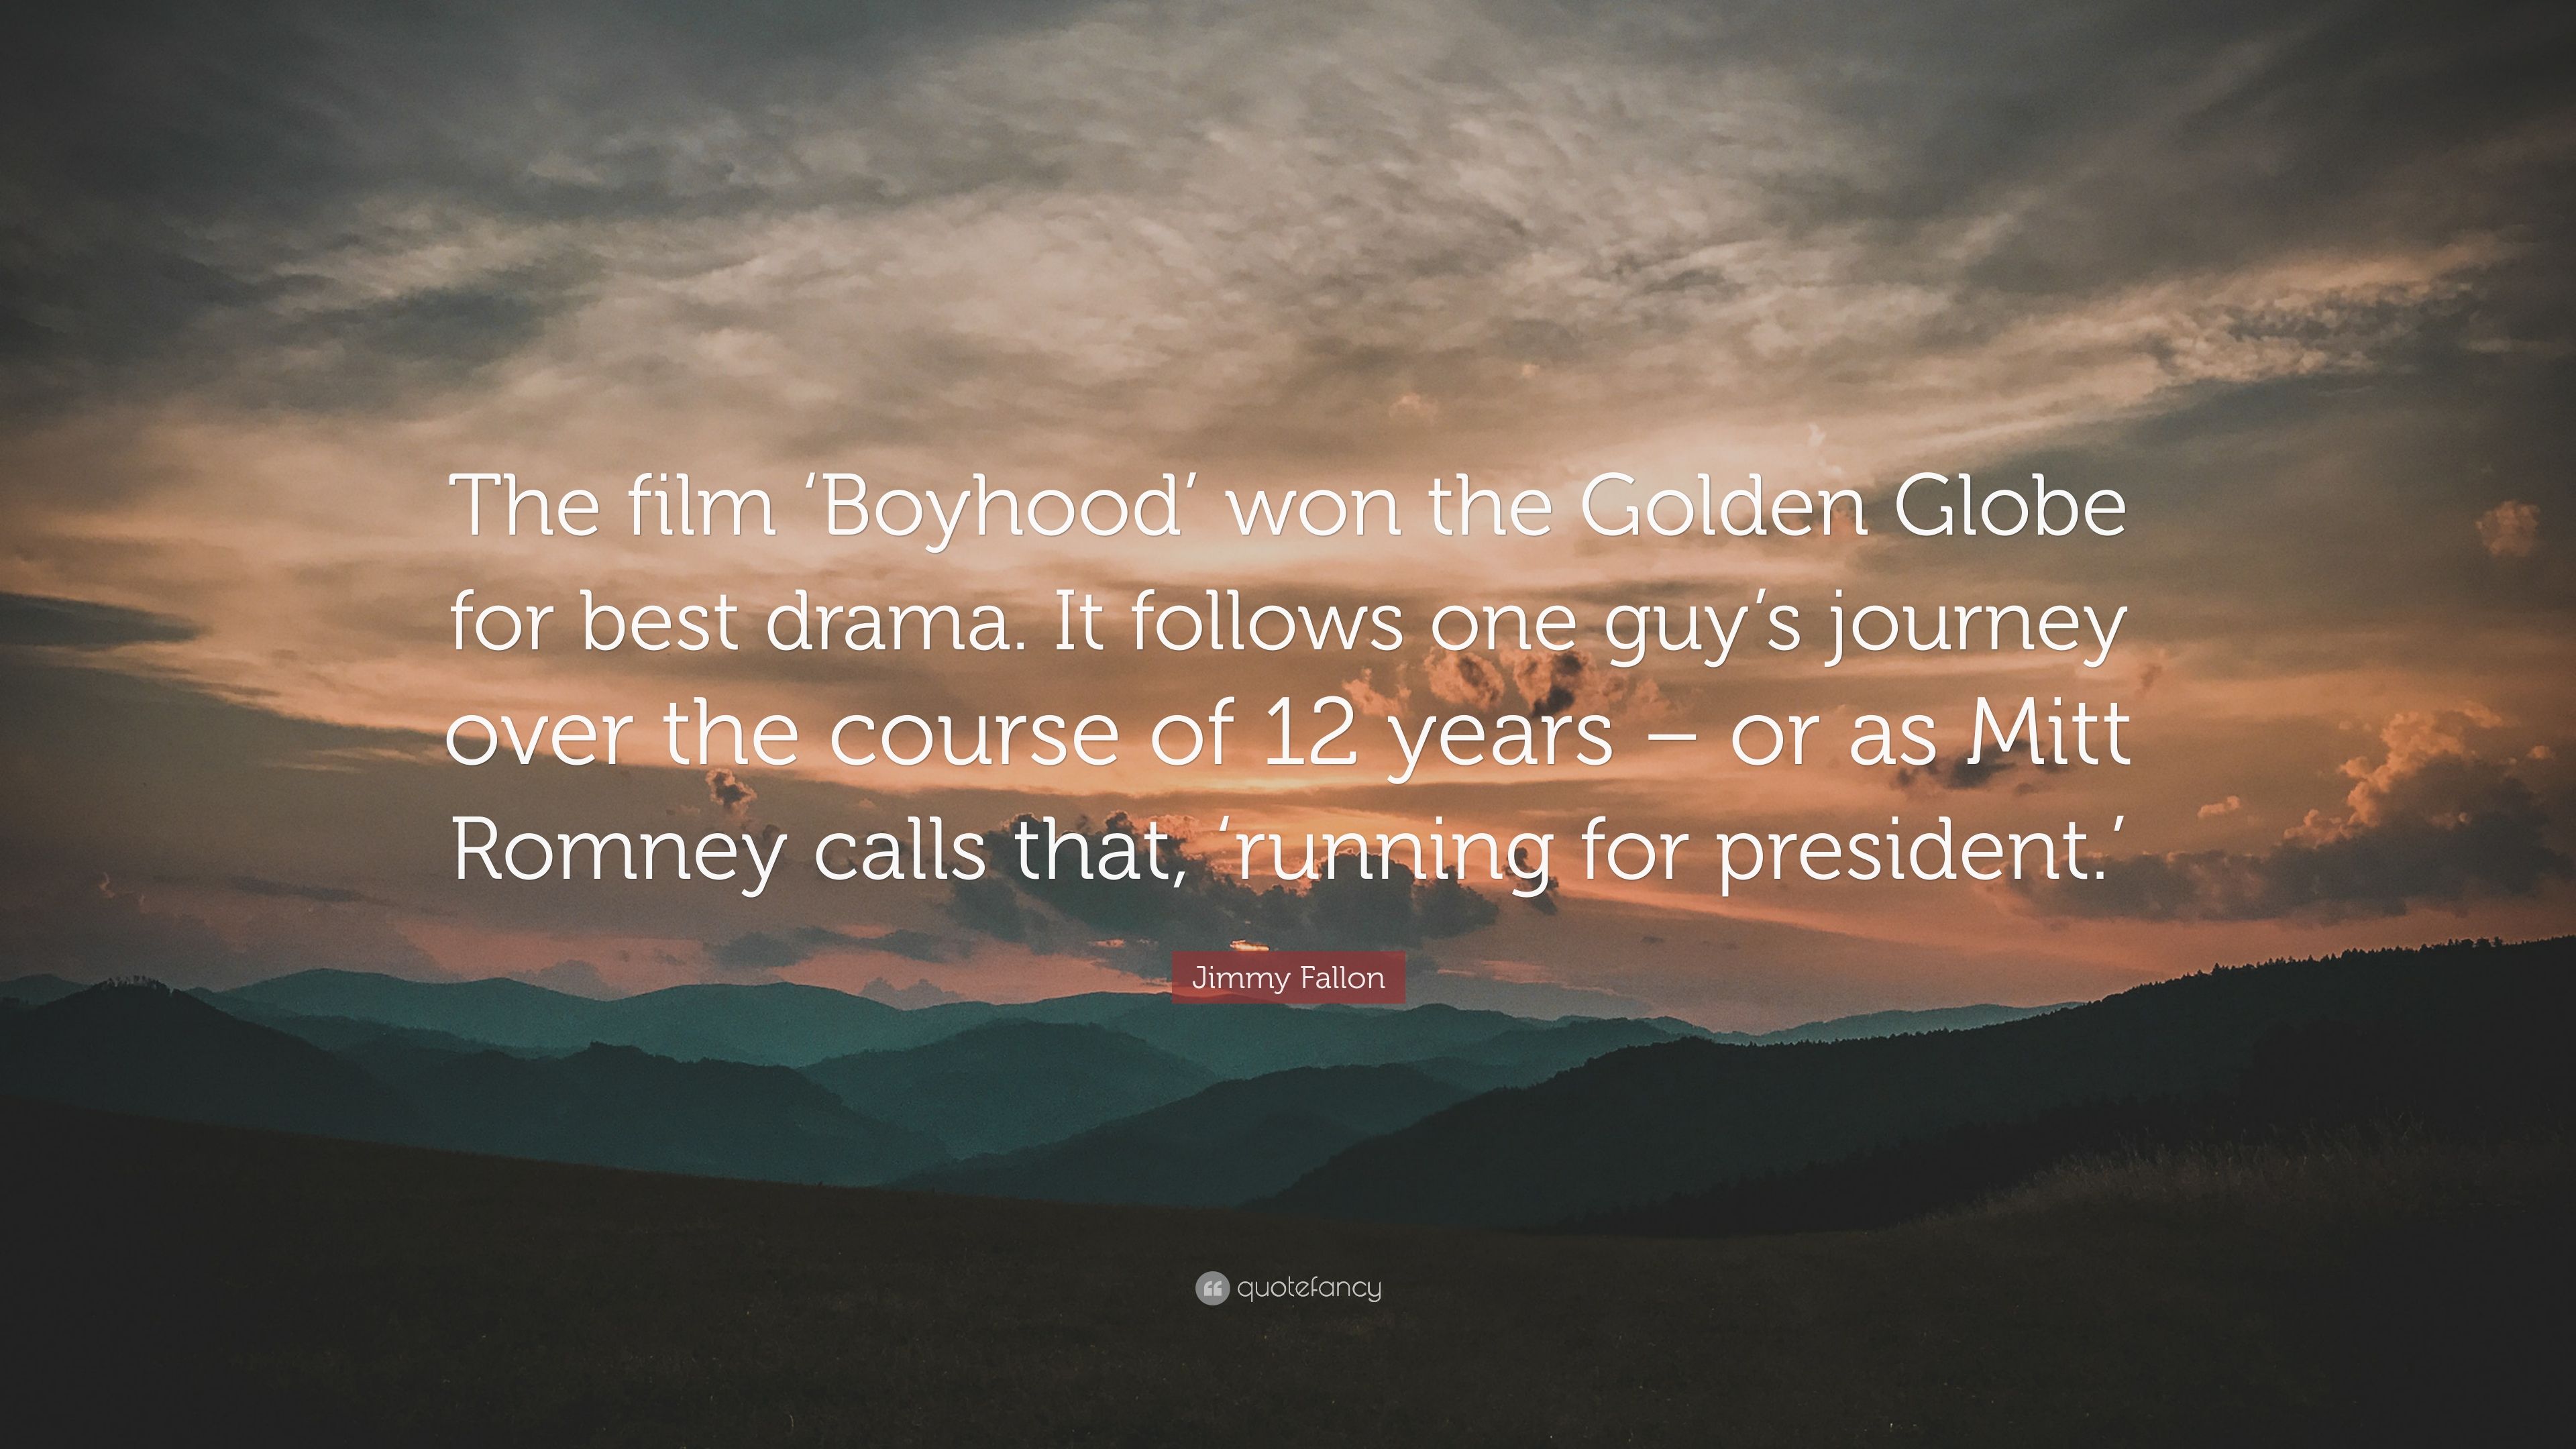 Jimmy Fallon Quote: “The film 'Boyhood' won the Golden Globe